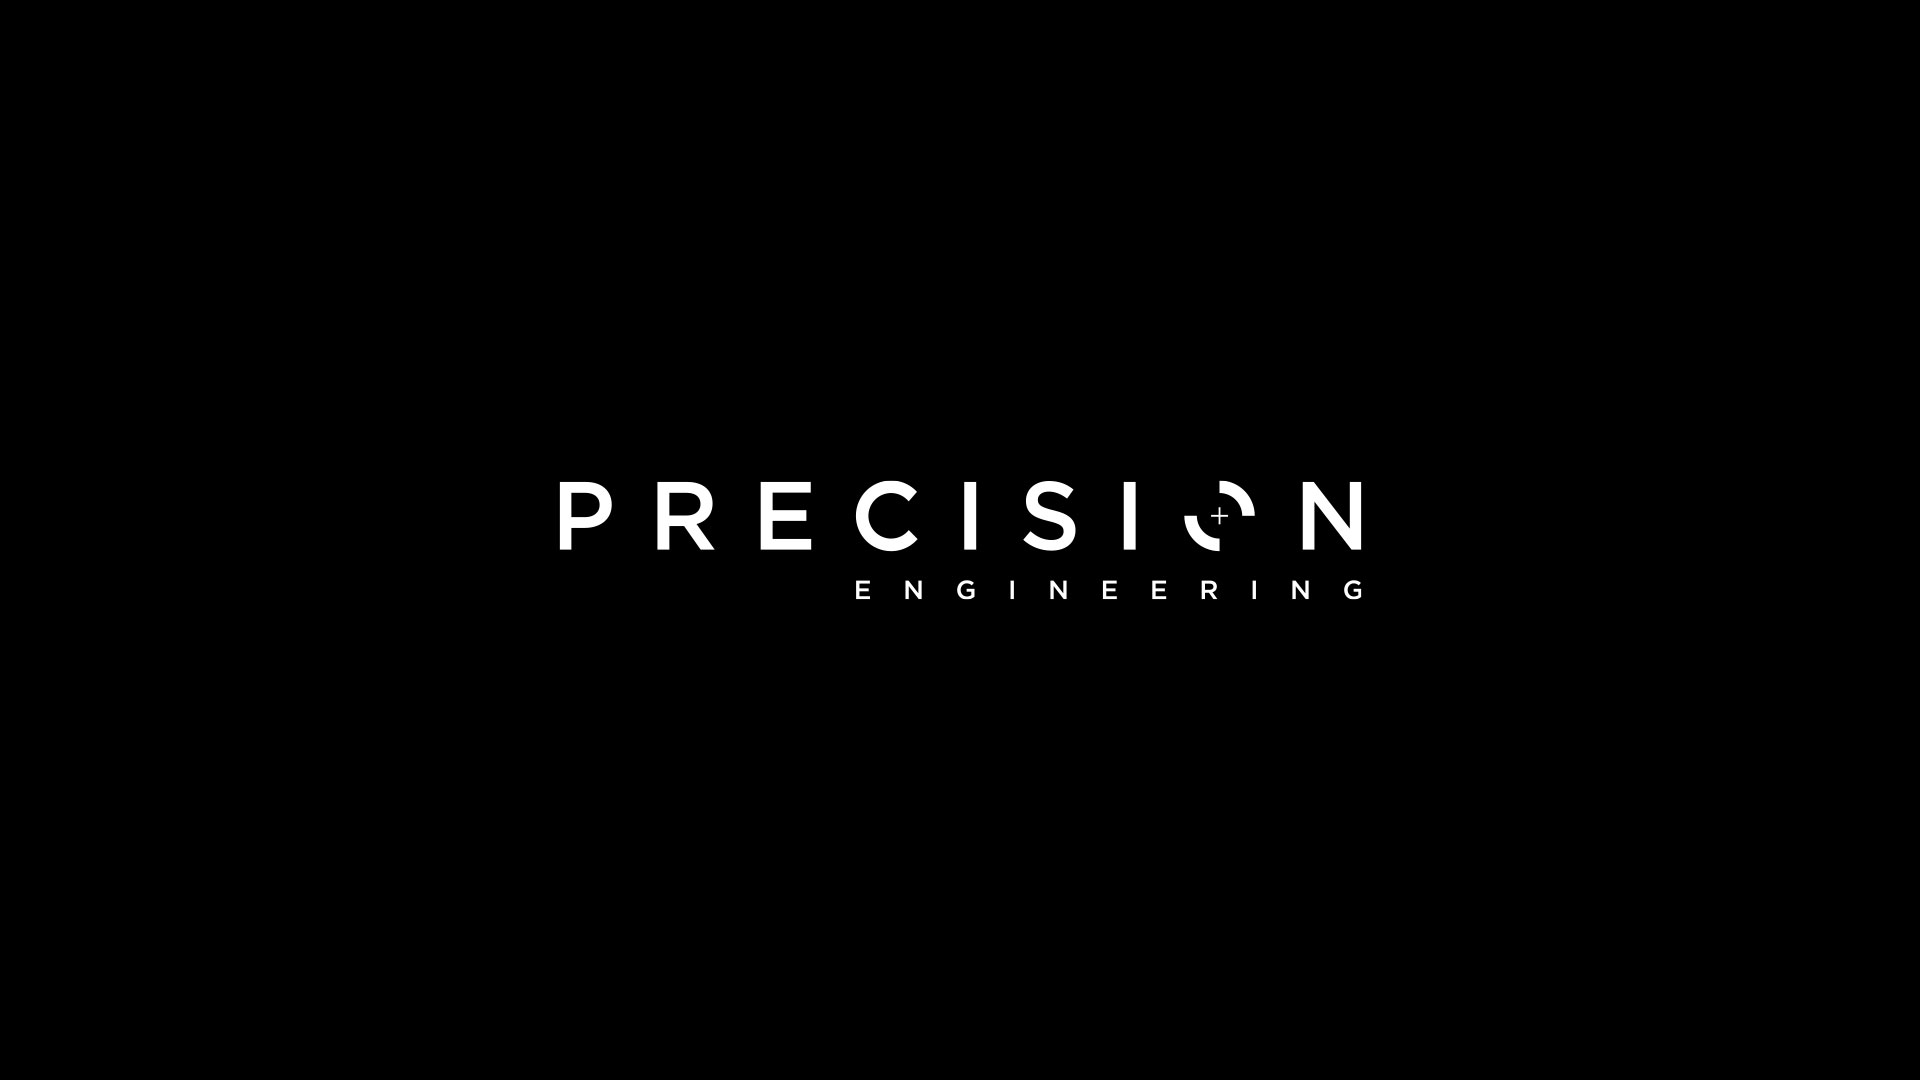 Precision Engineering logo concept